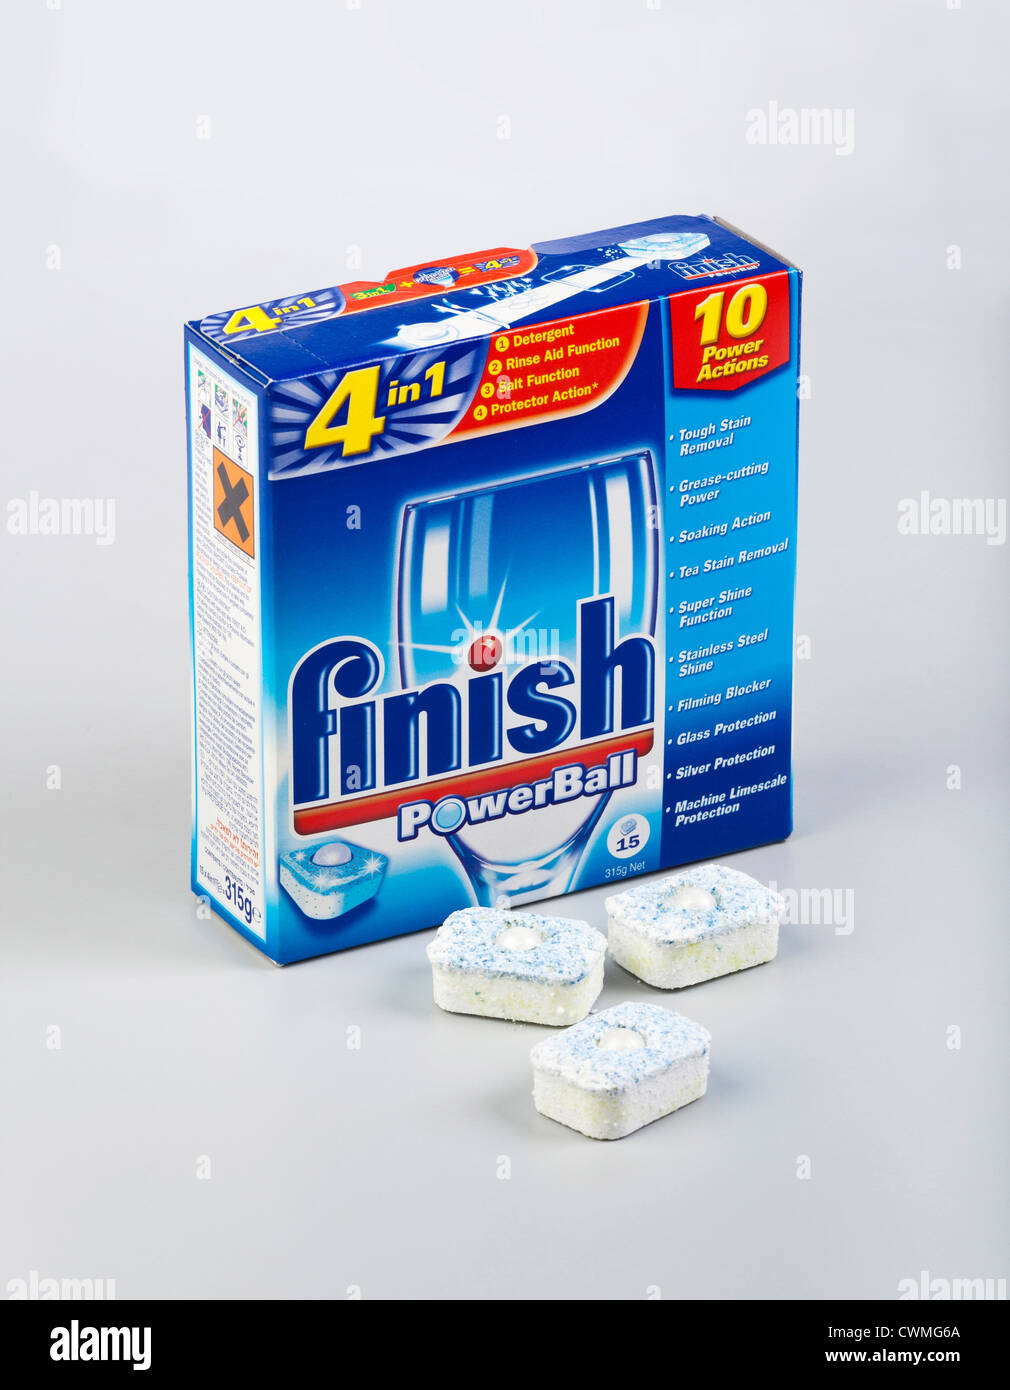 Finish dishwasher tablets made by Reckitt Benckiser Stock Photo